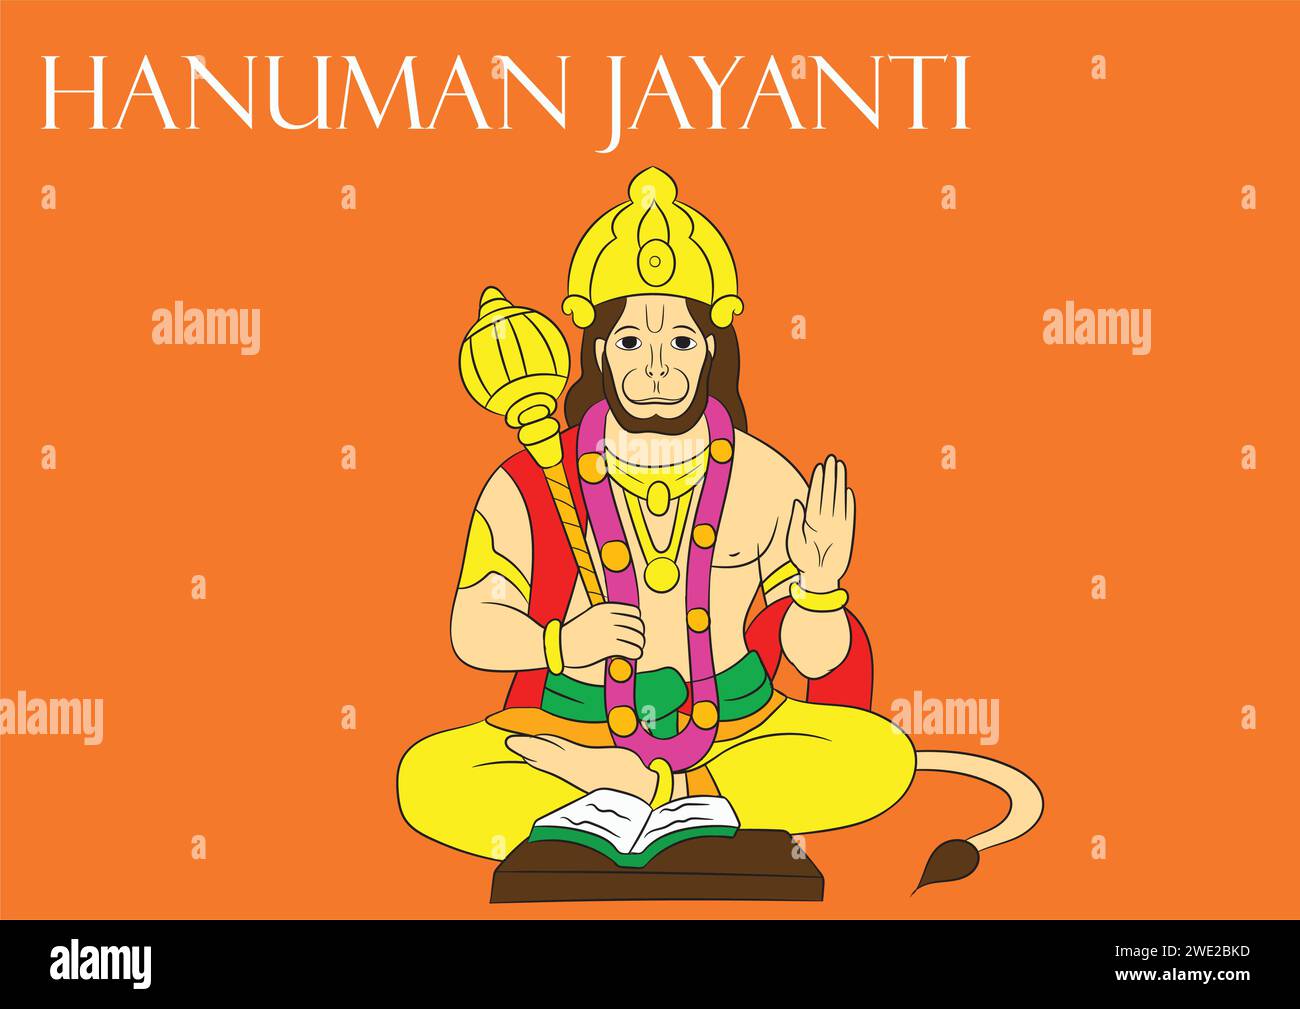 Hanuman Jayanti Post Vector Art, Icons, and Graphics for Free Download